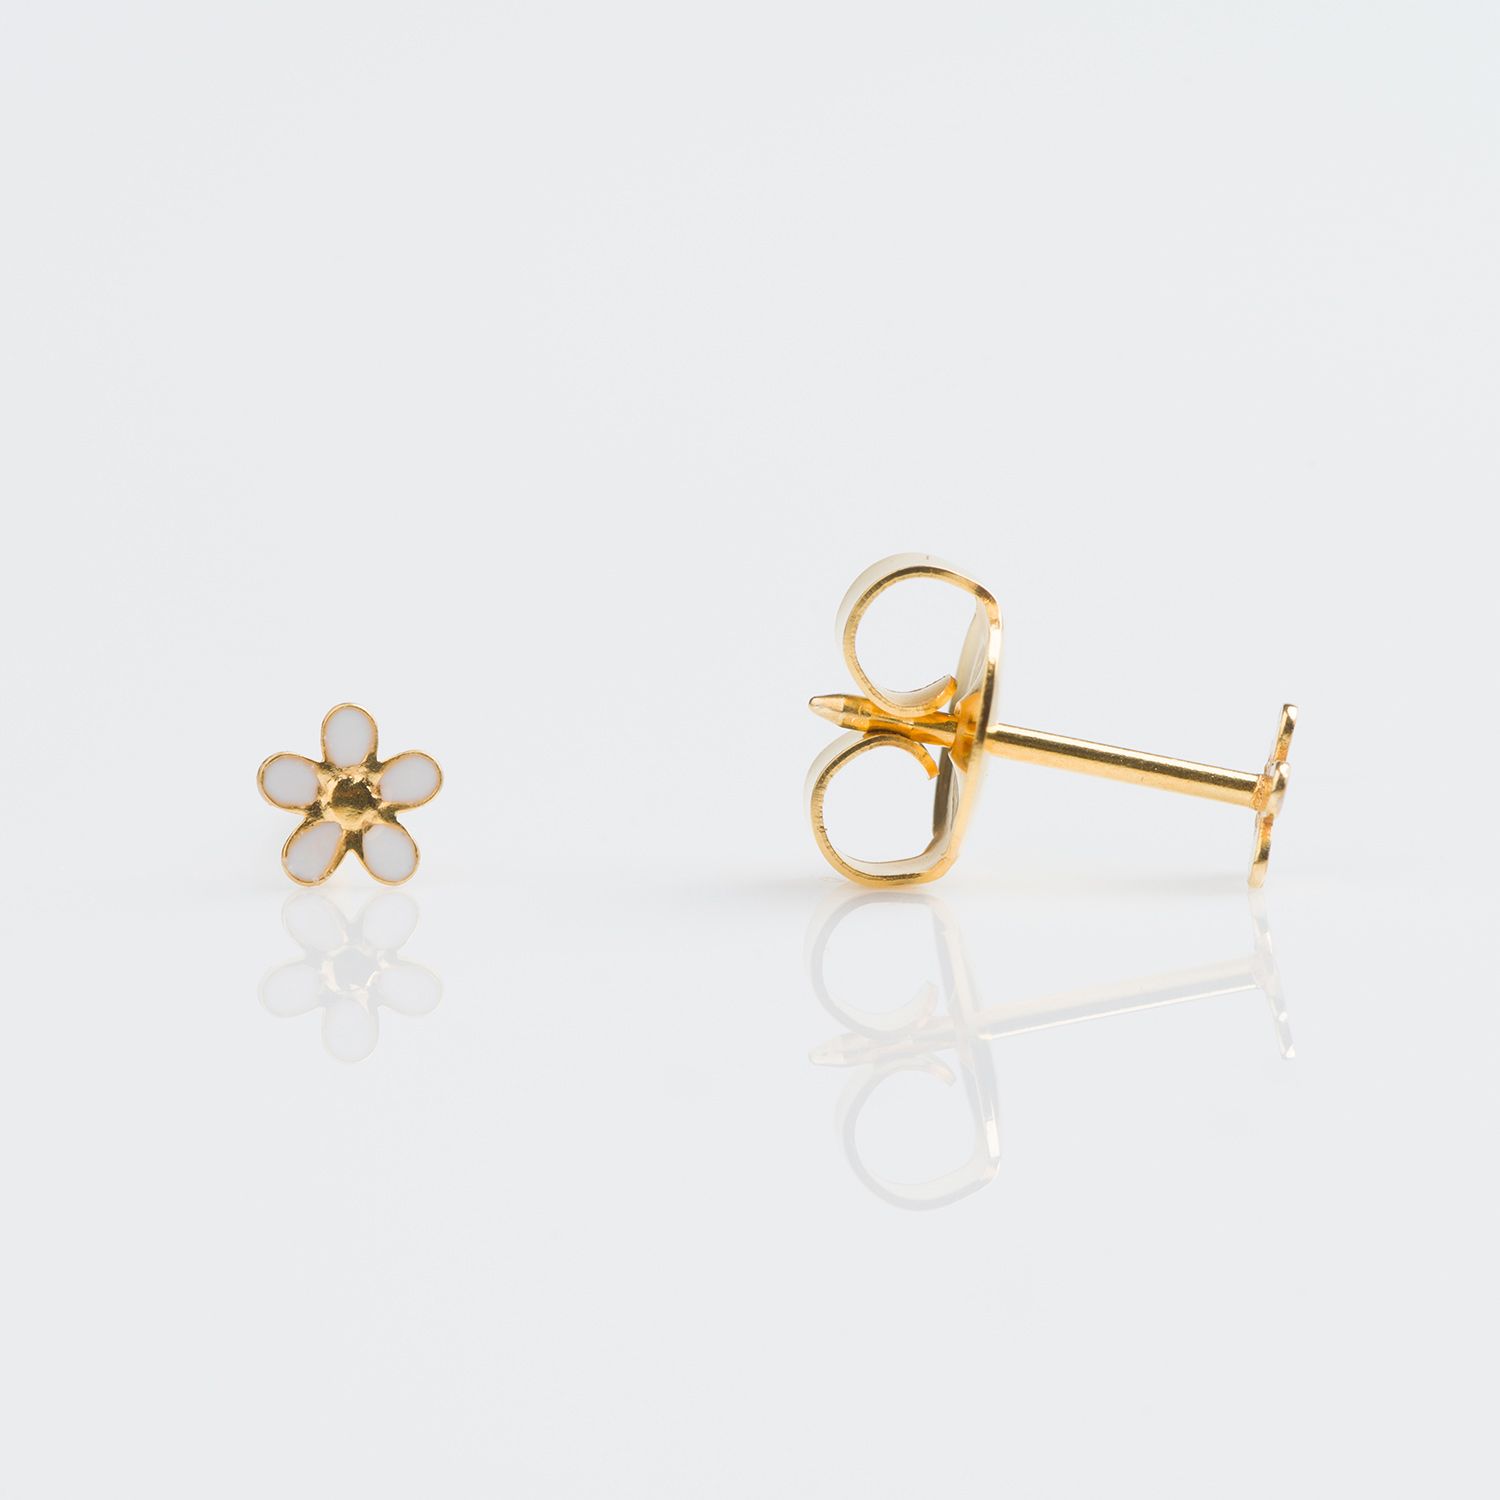 Studex 9Ct Gold Mini Petal Flower Piercing Earrings